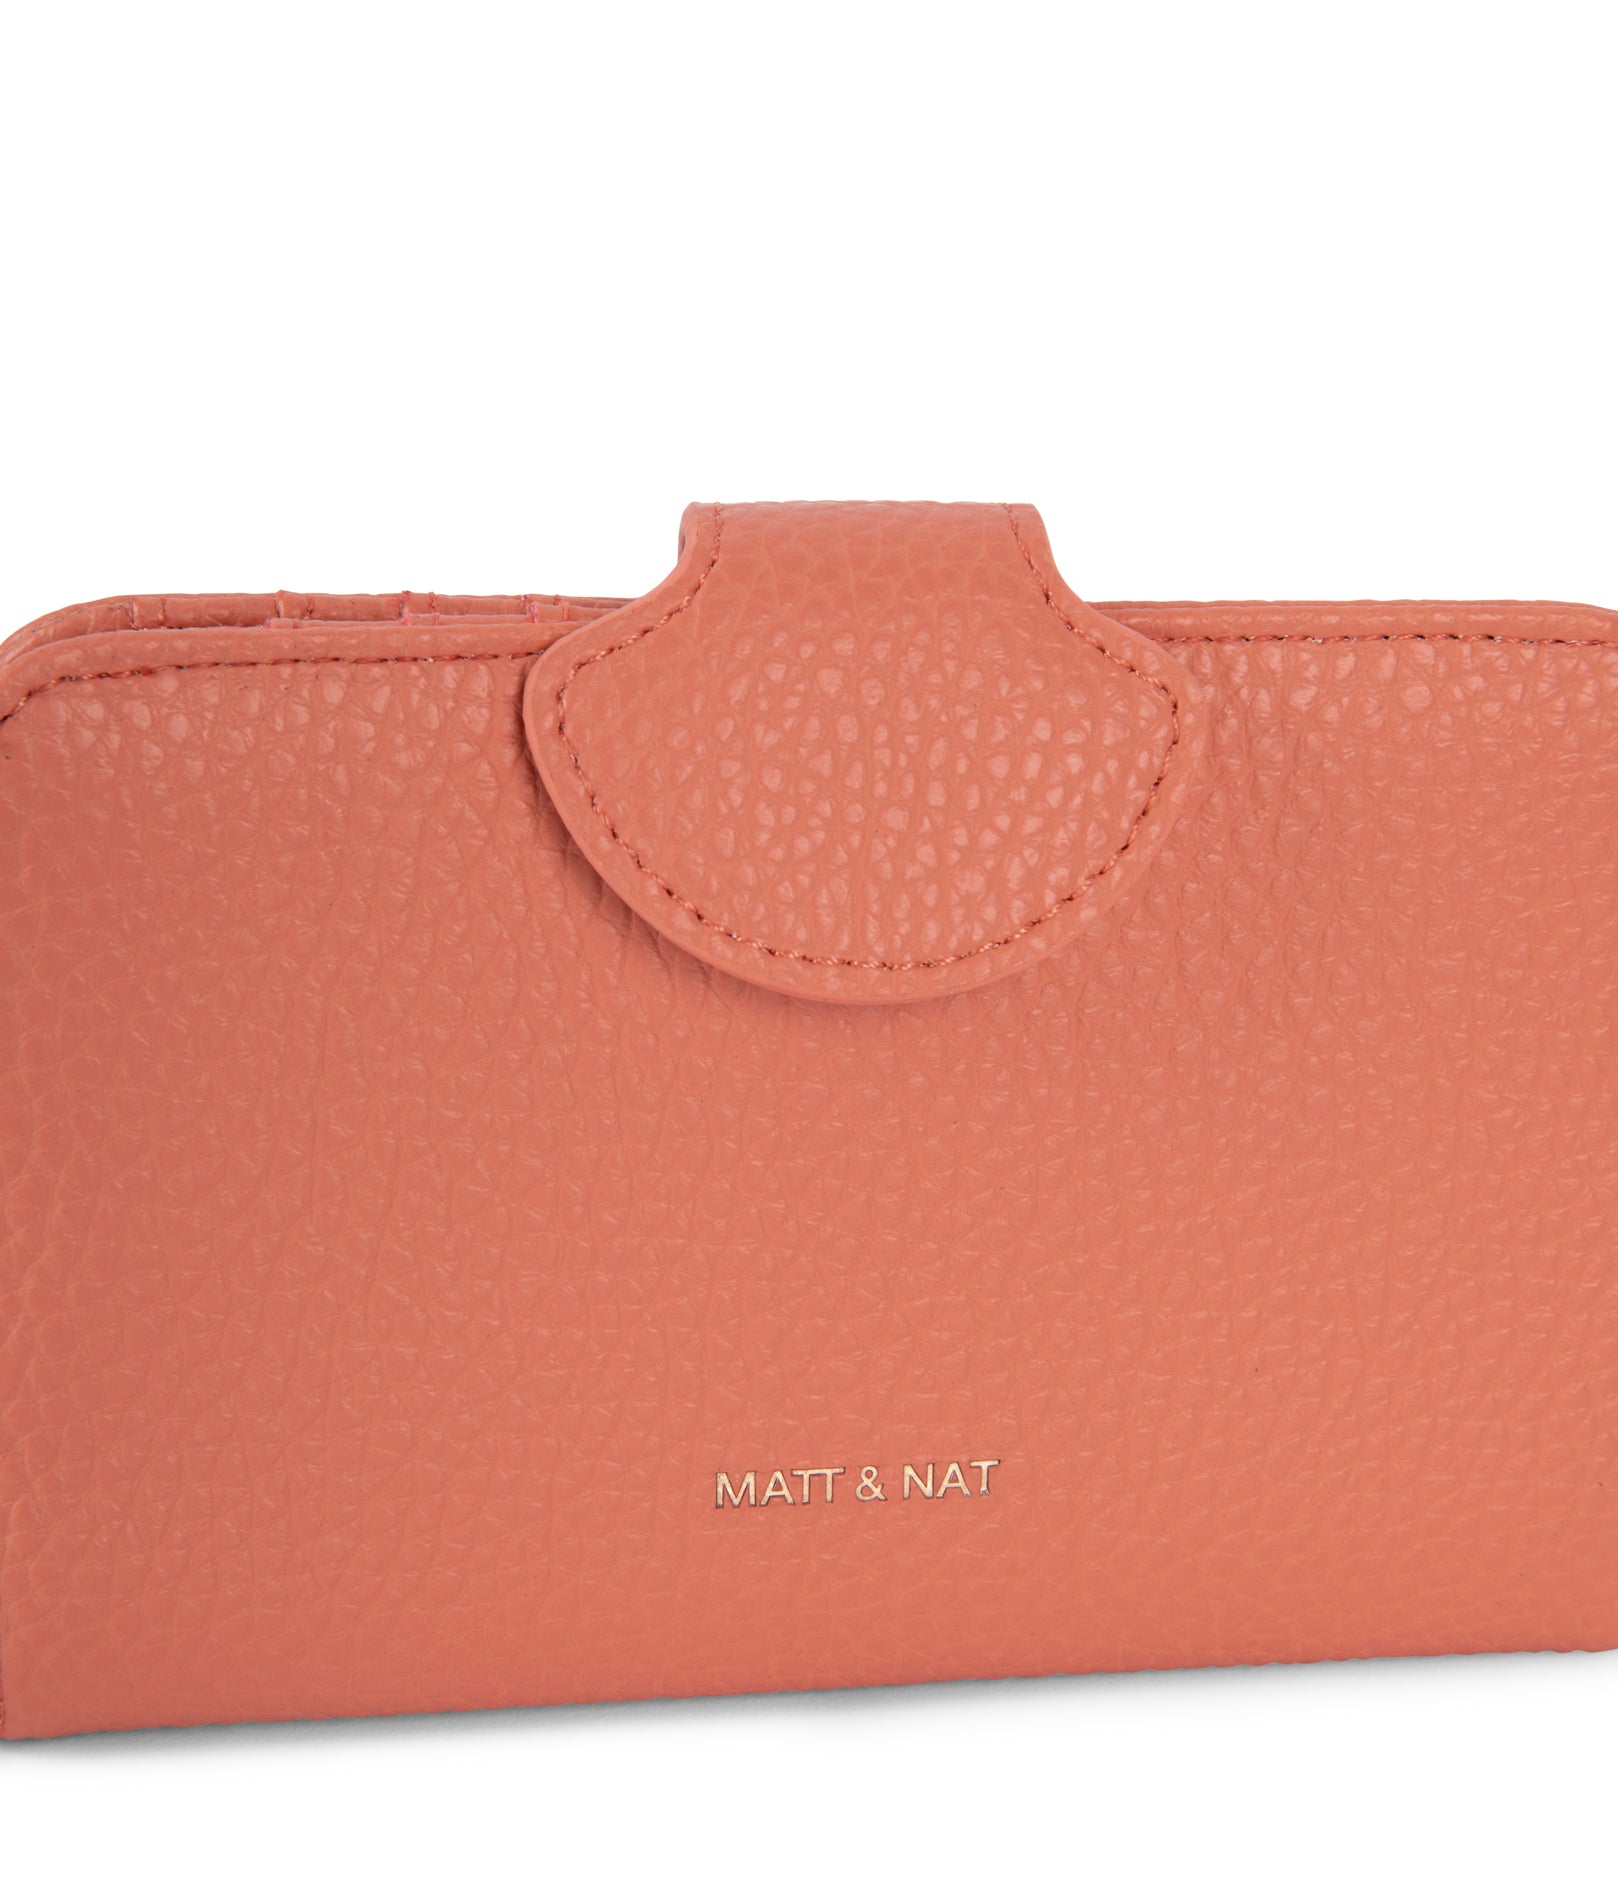 FLOATSM Small Vegan Wallet - Purity | Color: Orange, Pink - variant::plush